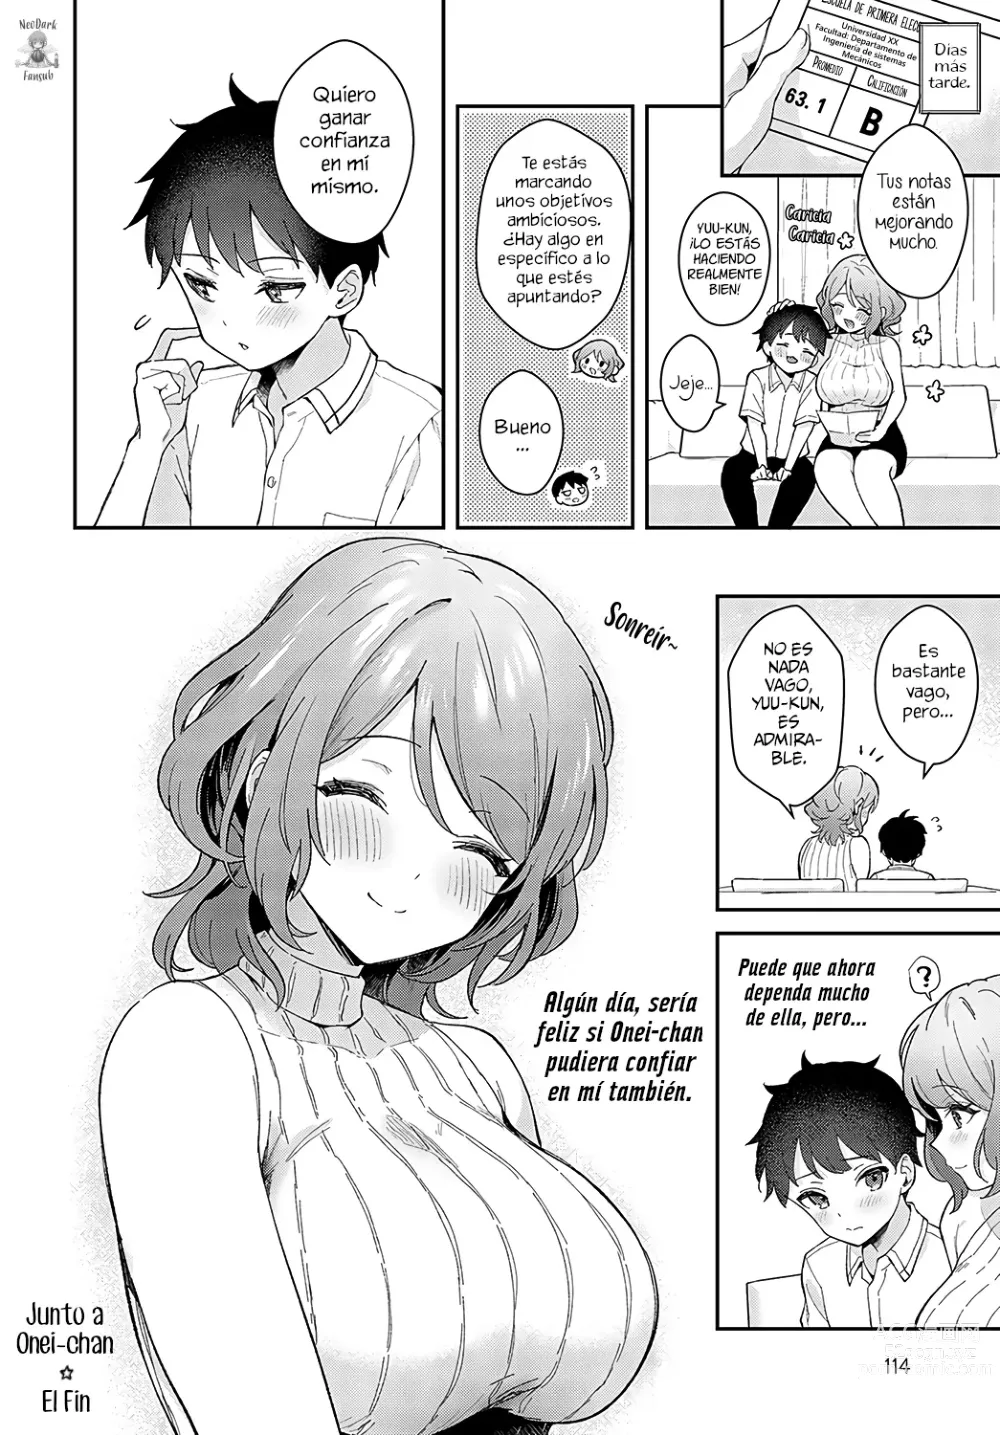 Page 26 of manga Junto a Onei-chan